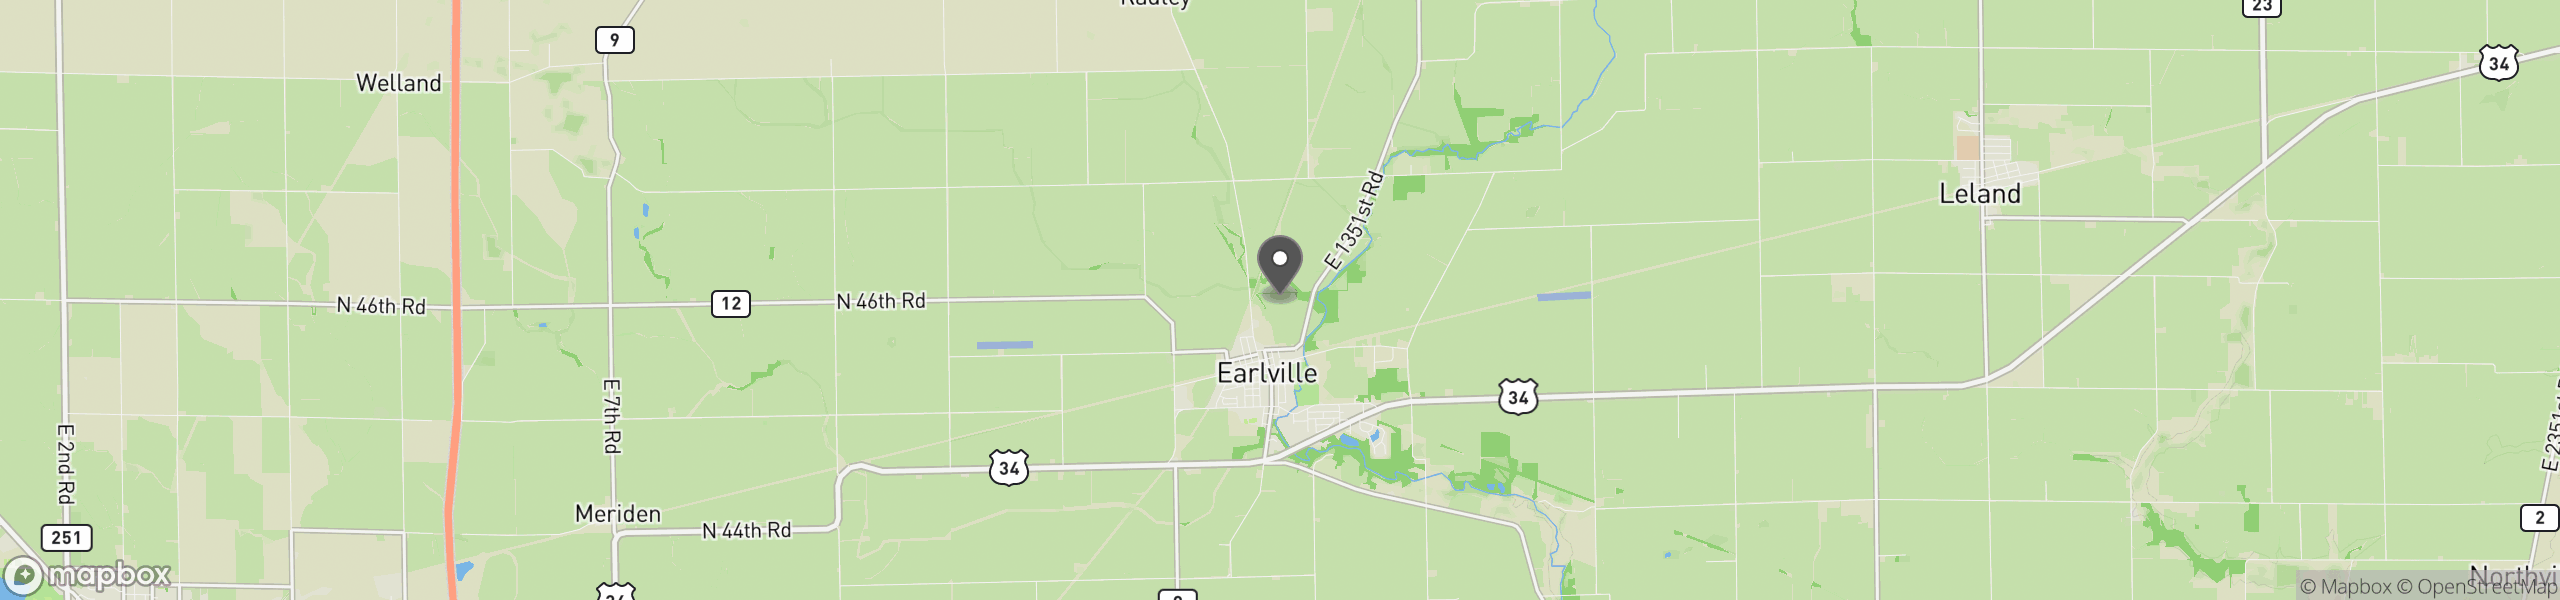 Earlville, IL